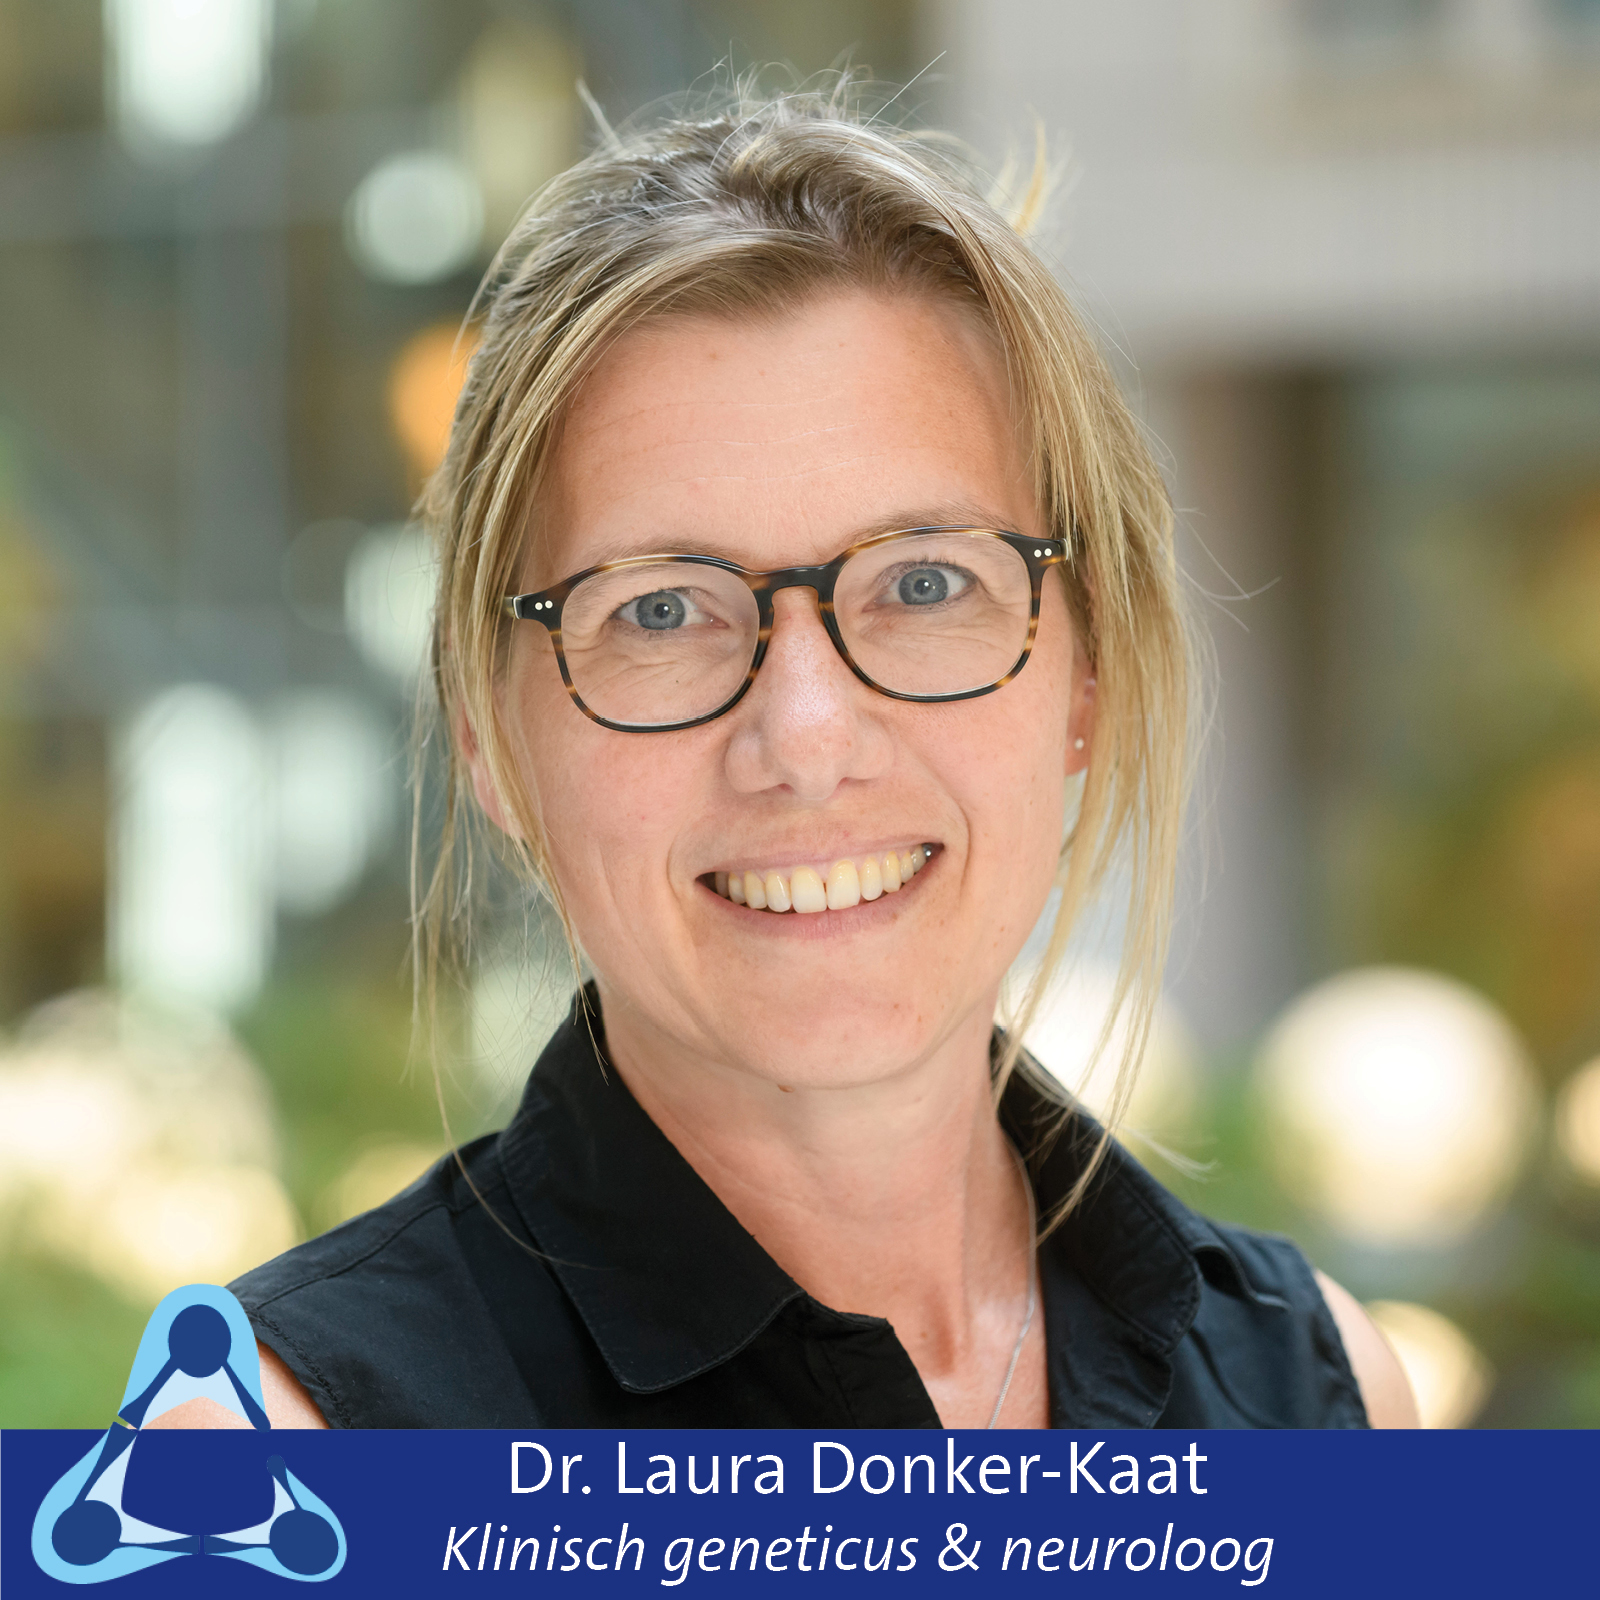 Laura Donker-Kaat